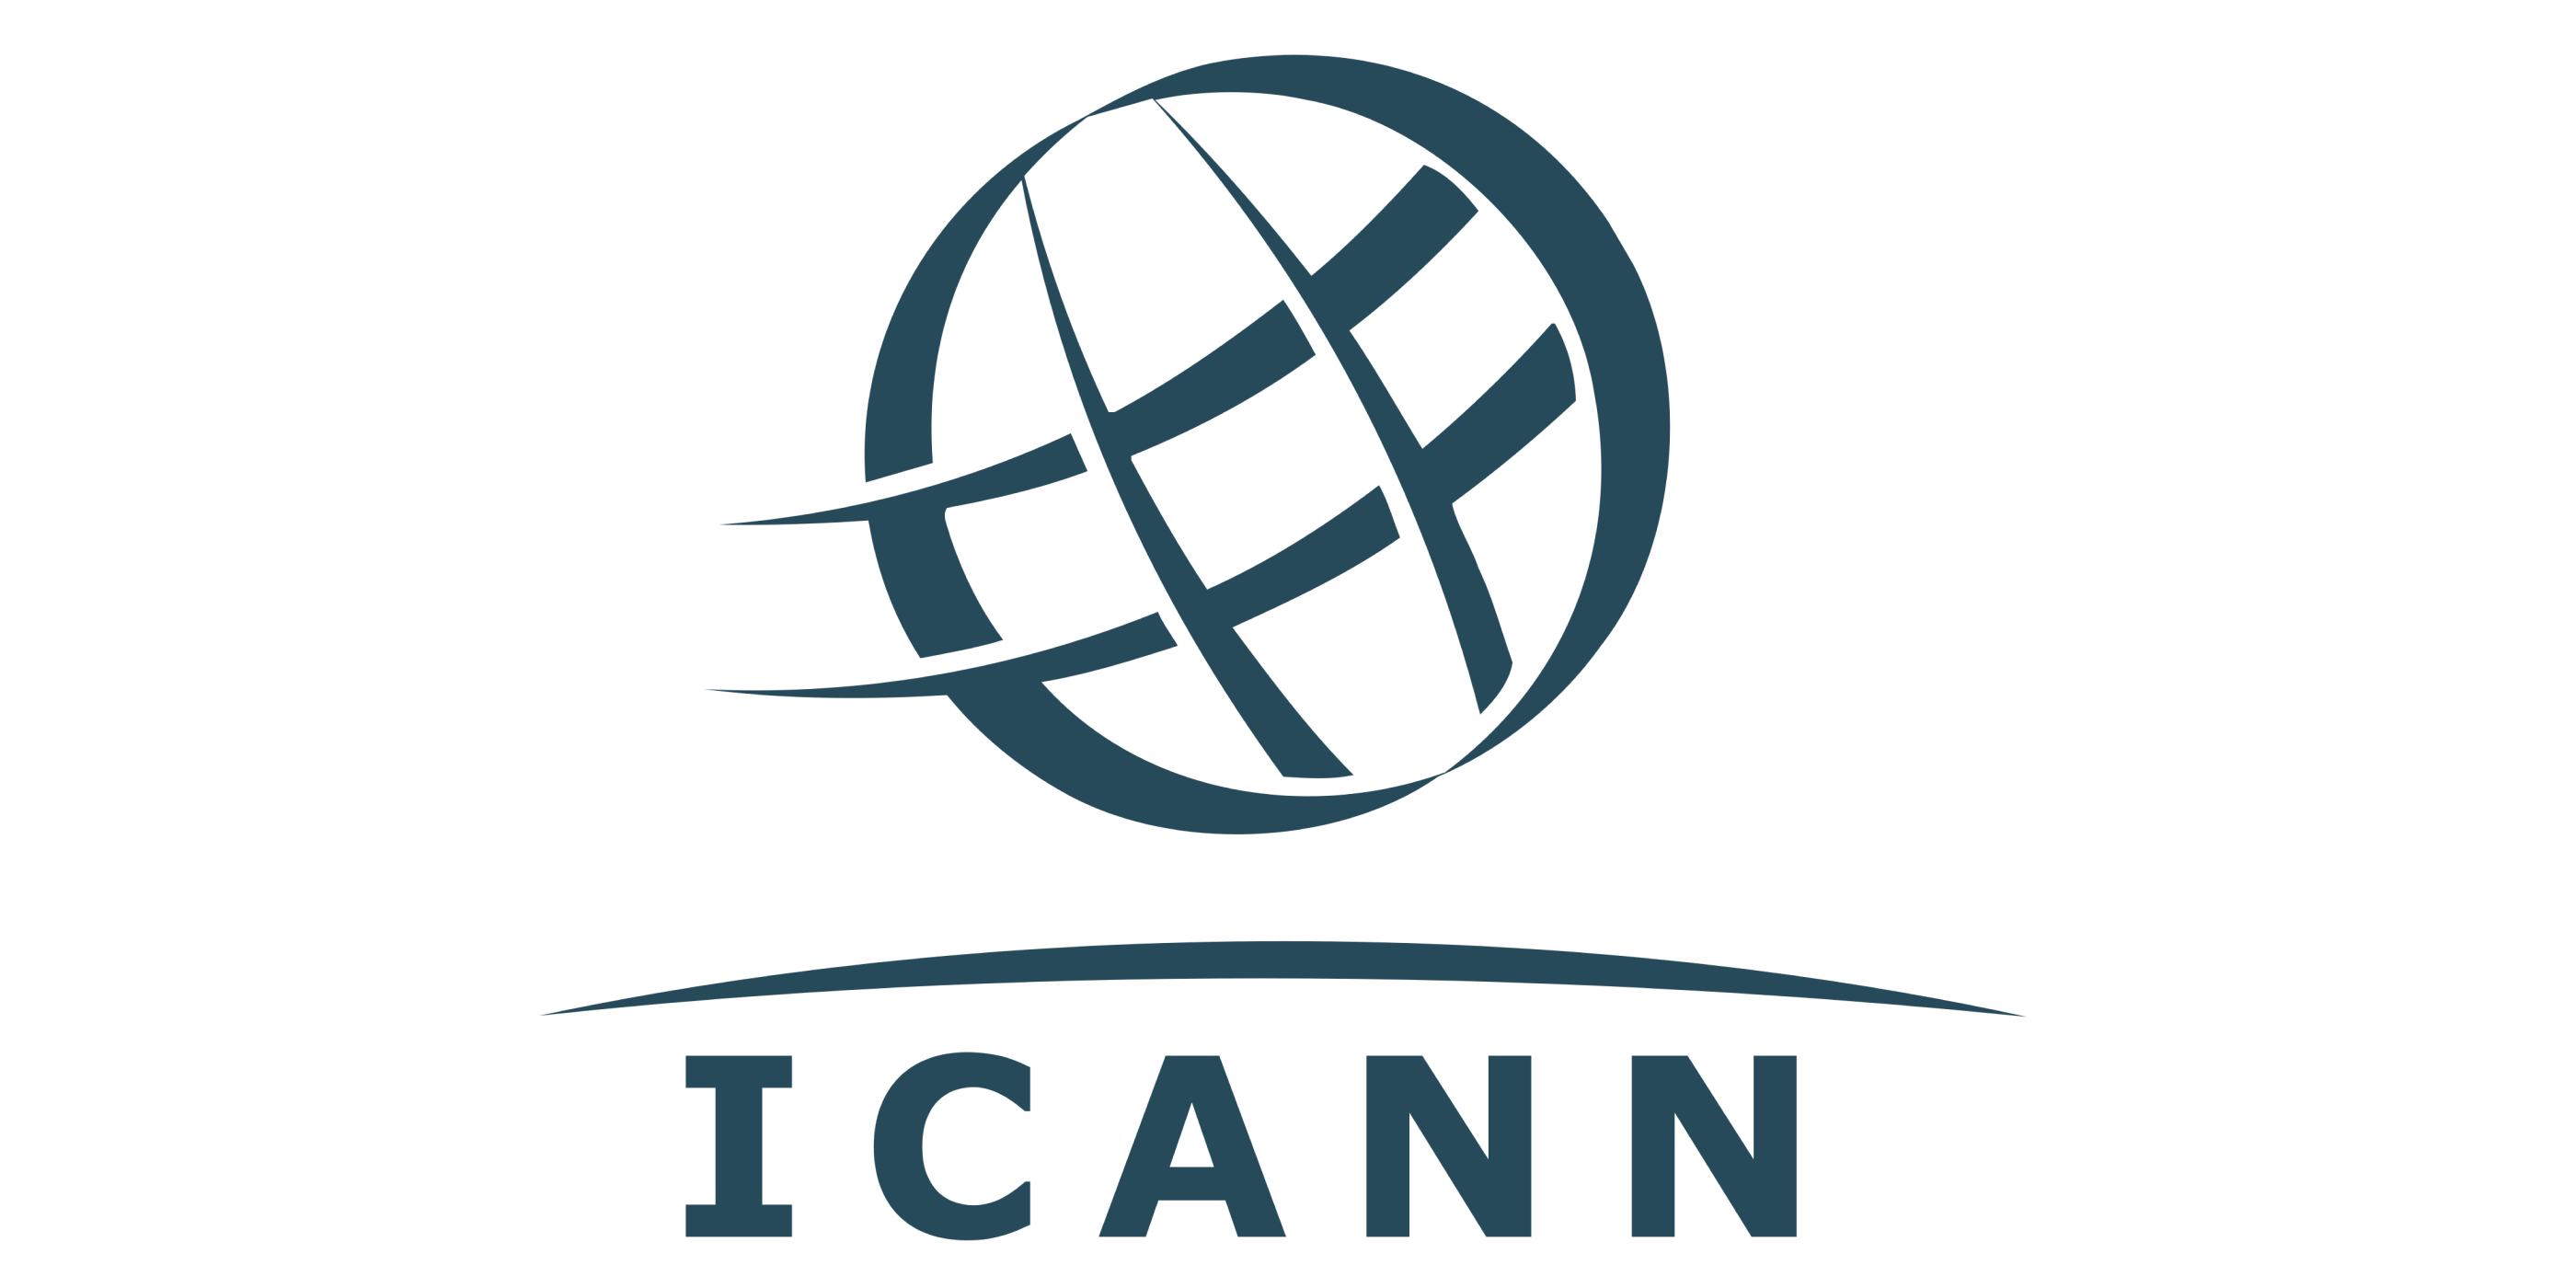 ICANN-logo